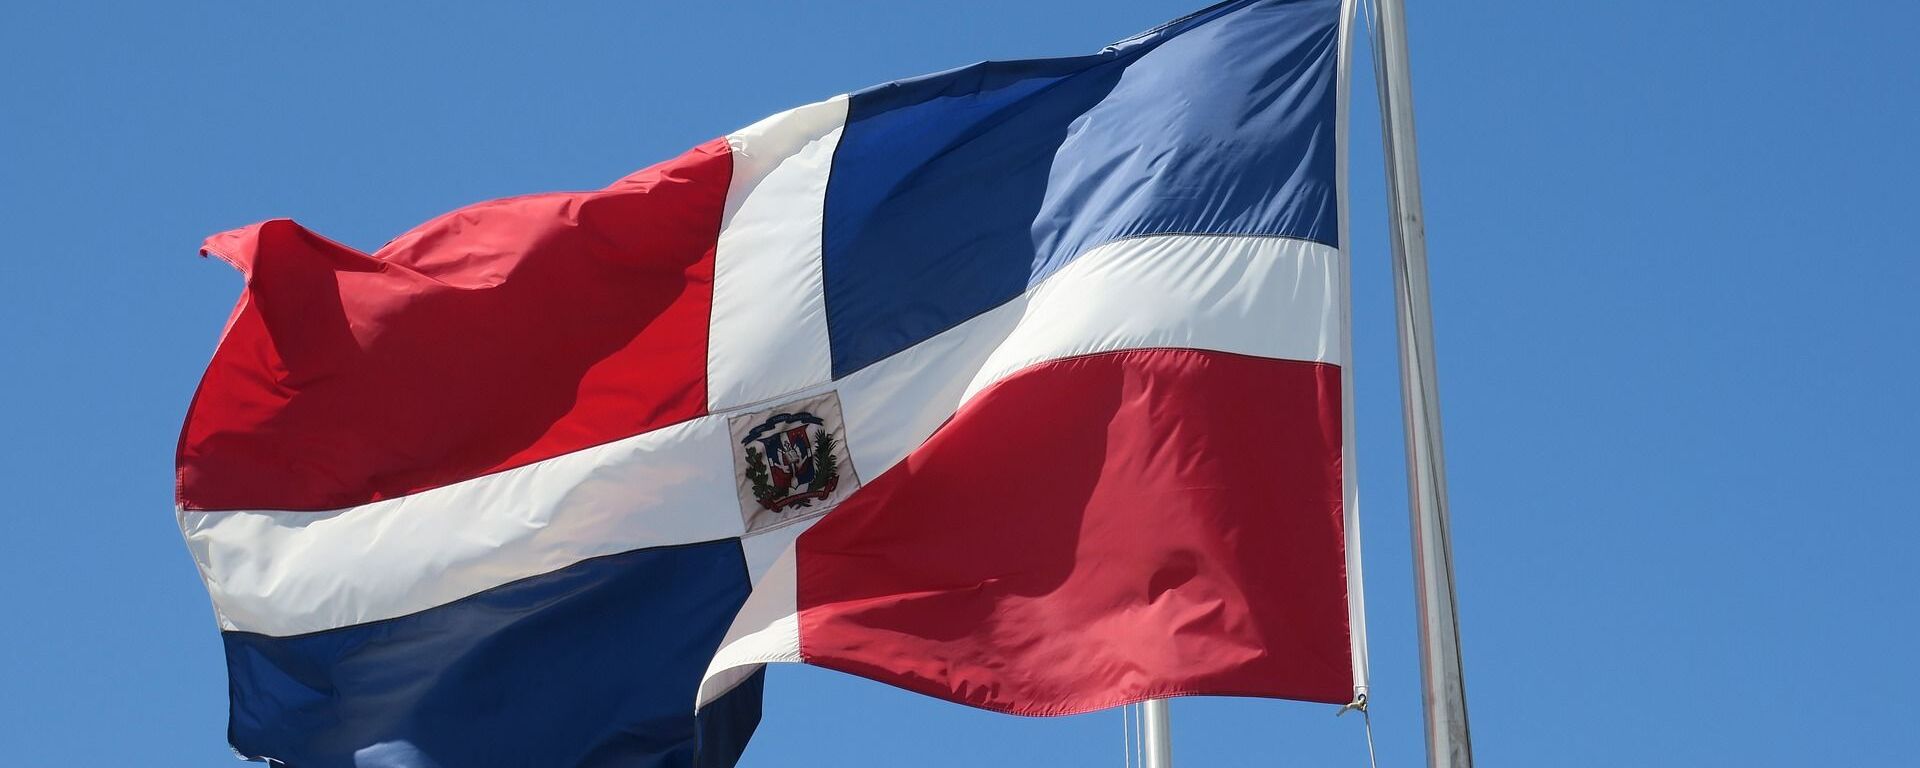 La bandera de la República Dominicana - Sputnik Mundo, 1920, 20.05.2021